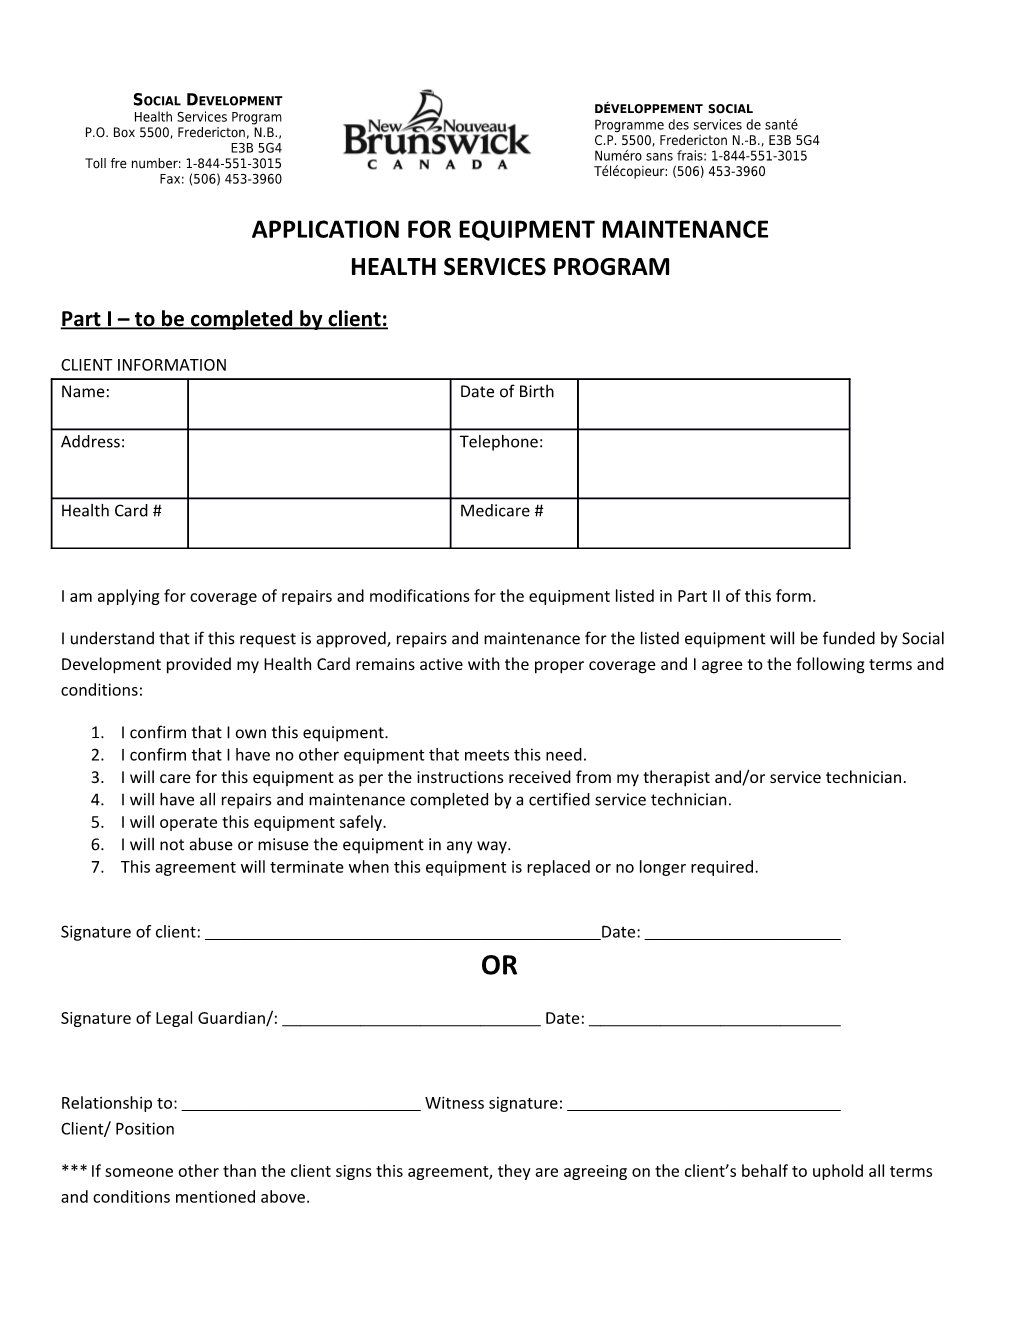 Application for Equipment Maintenance